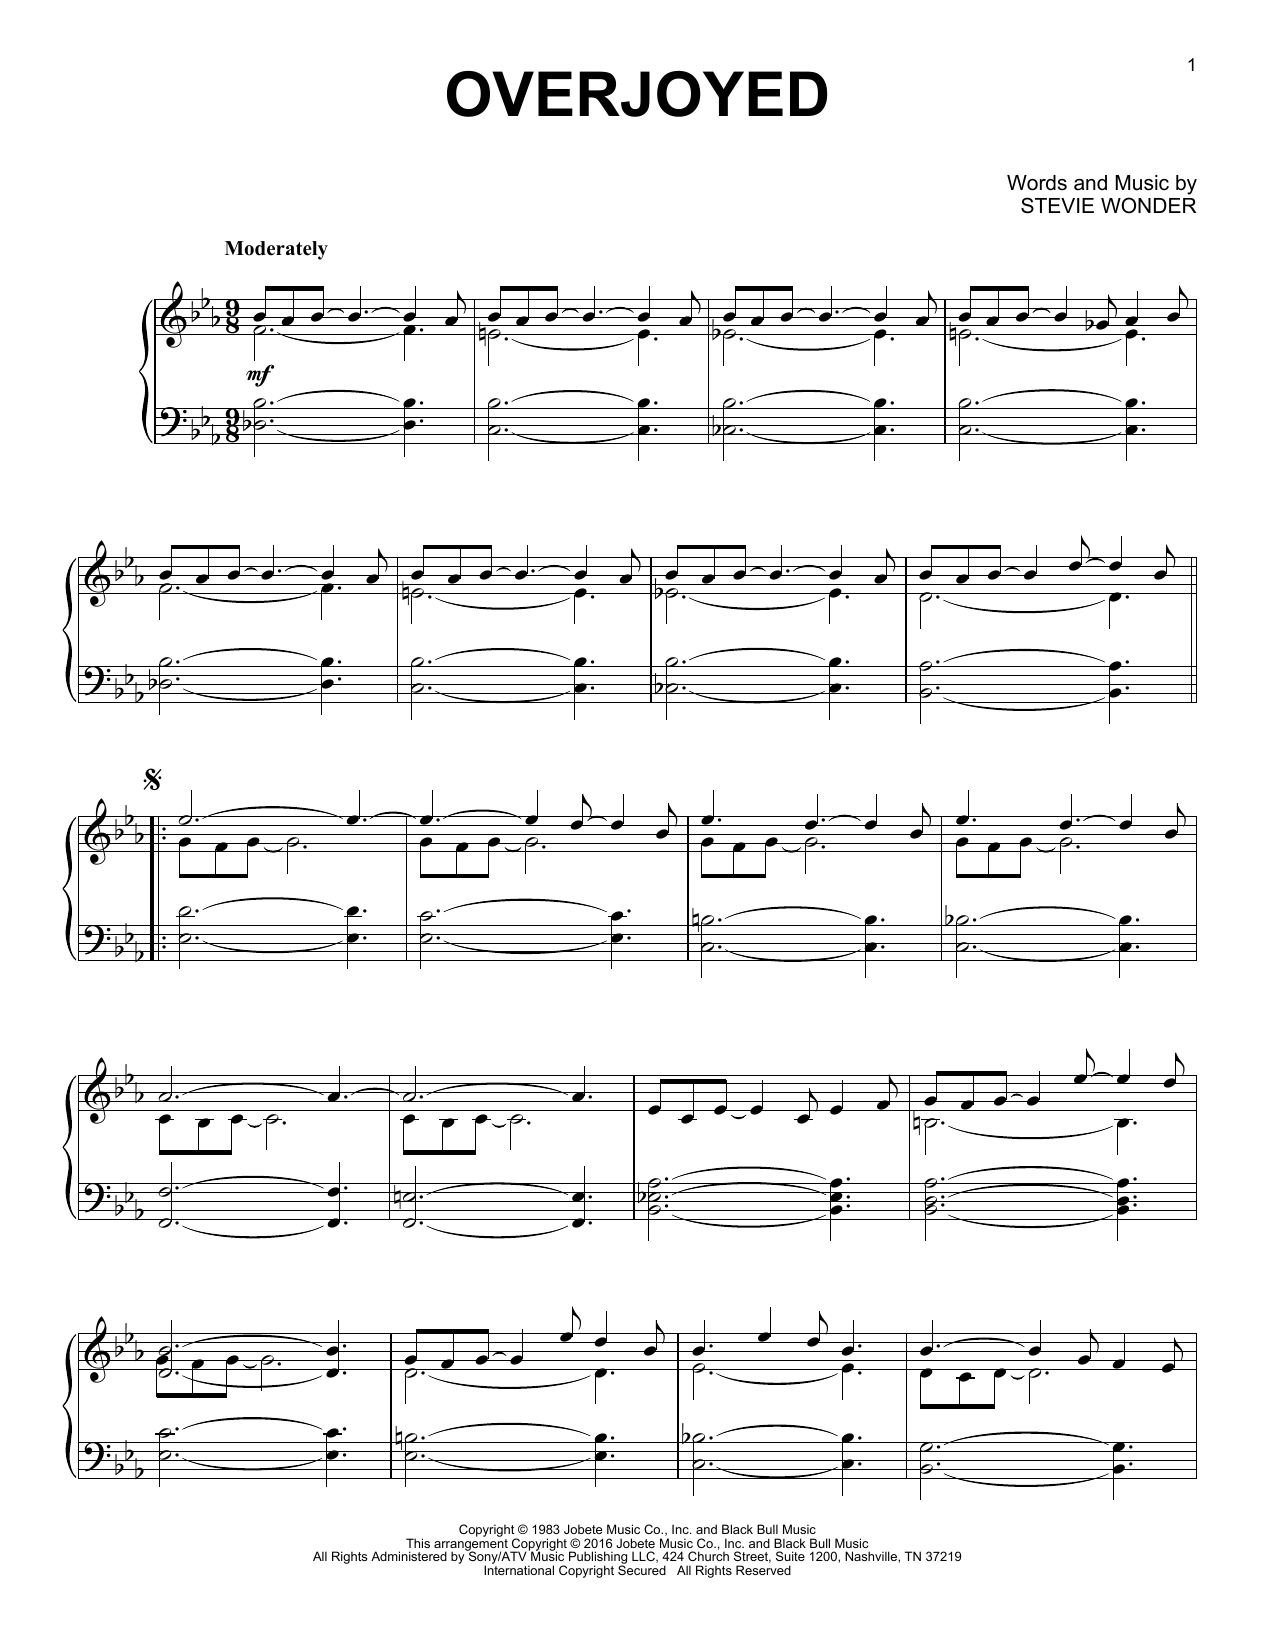 Stevie Wonder Overjoyed [Jazz version] Sheet Music Notes & Chords for Piano - Download or Print PDF